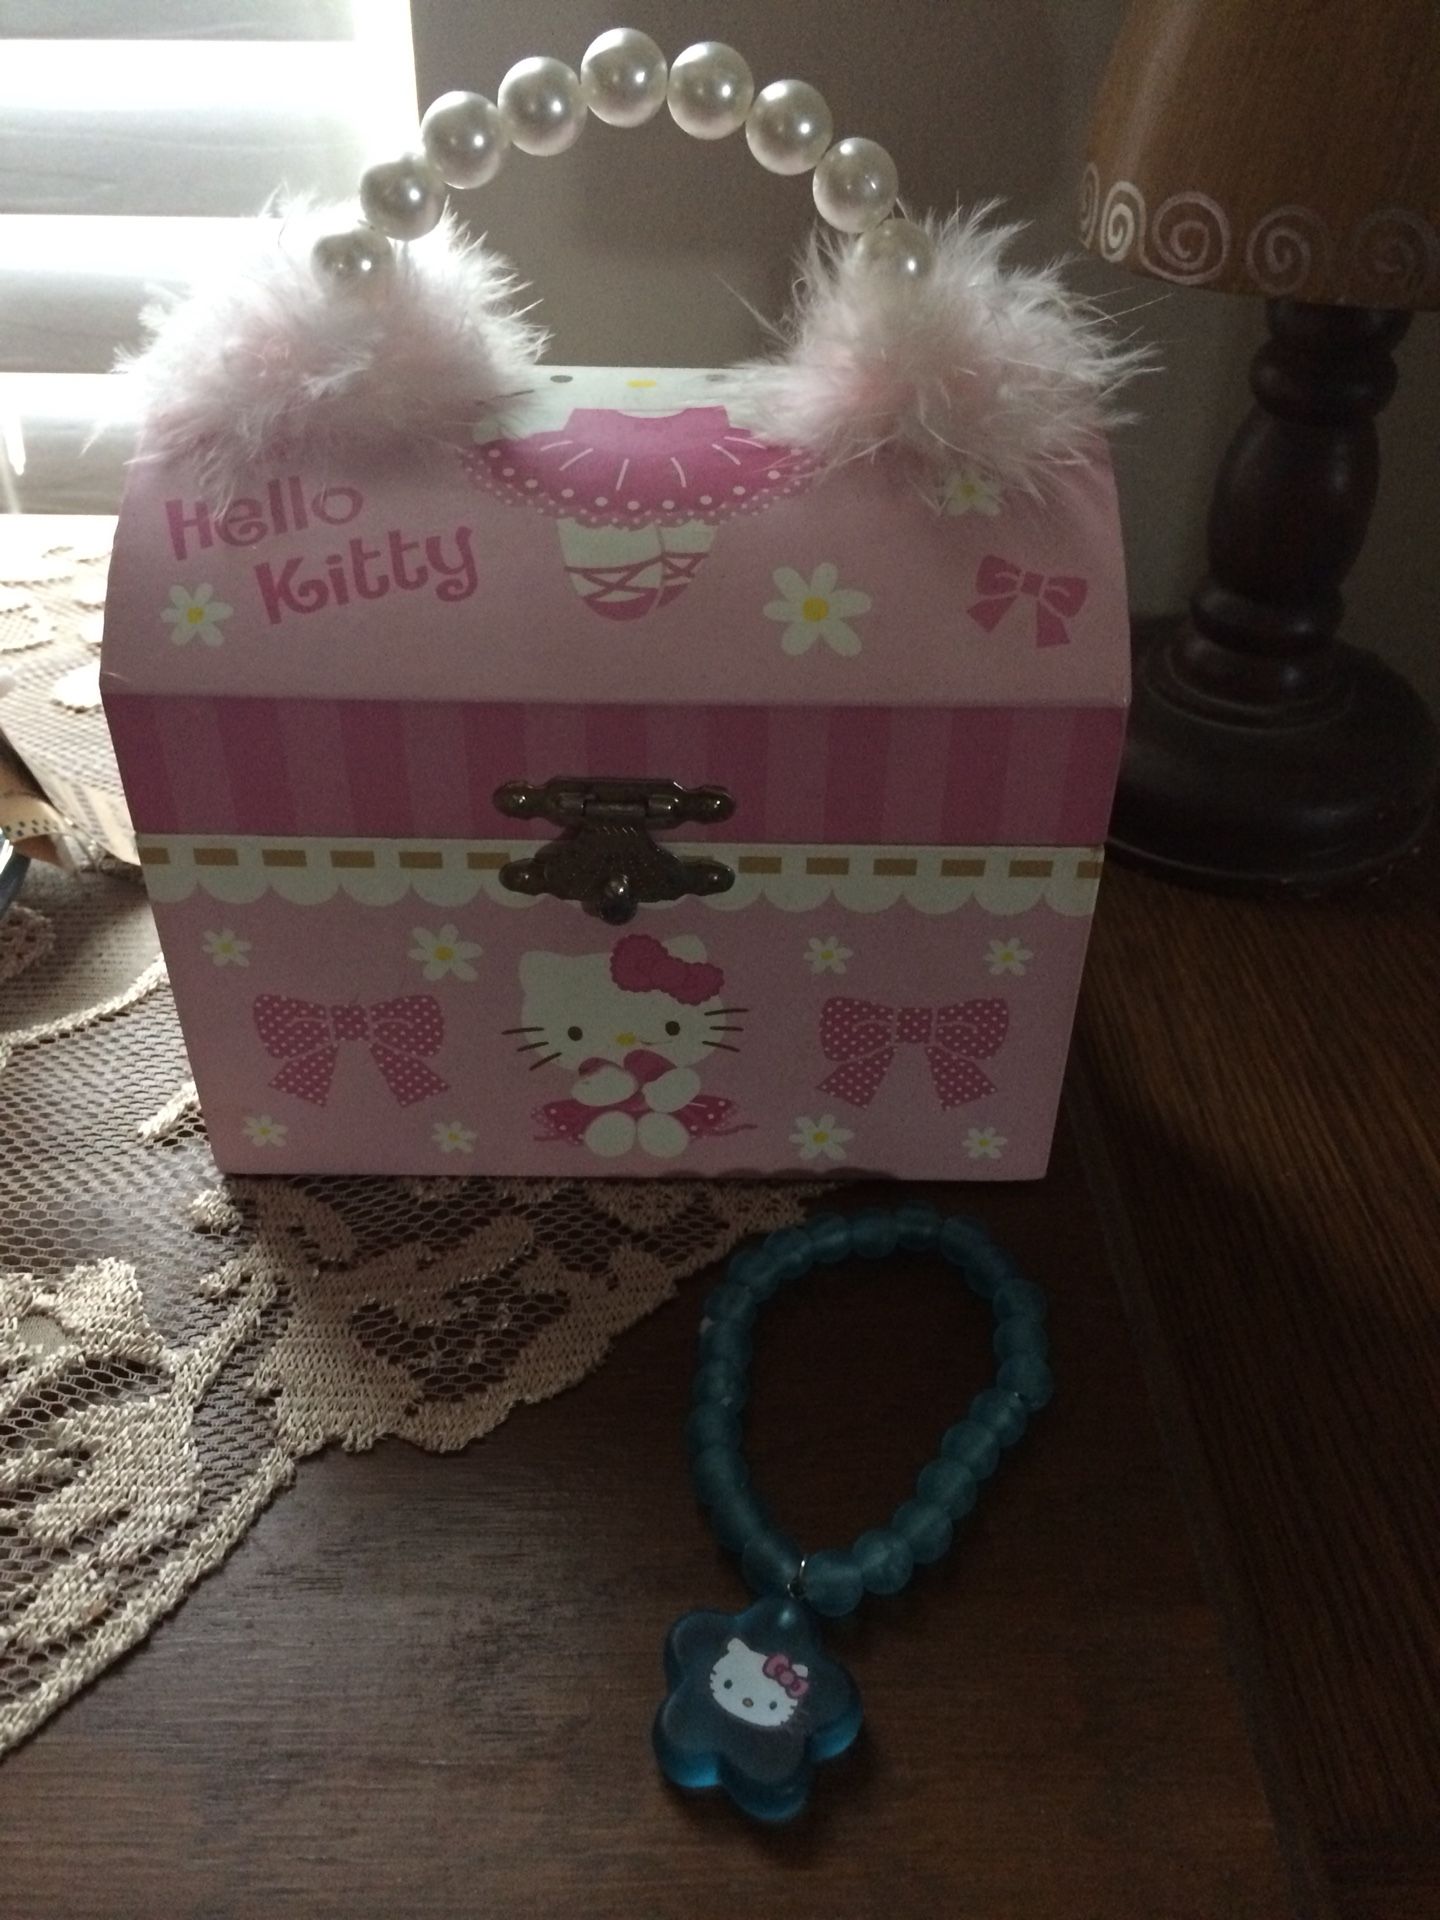 Hello Kitty jewelry box with winding Hello Kitty dancer